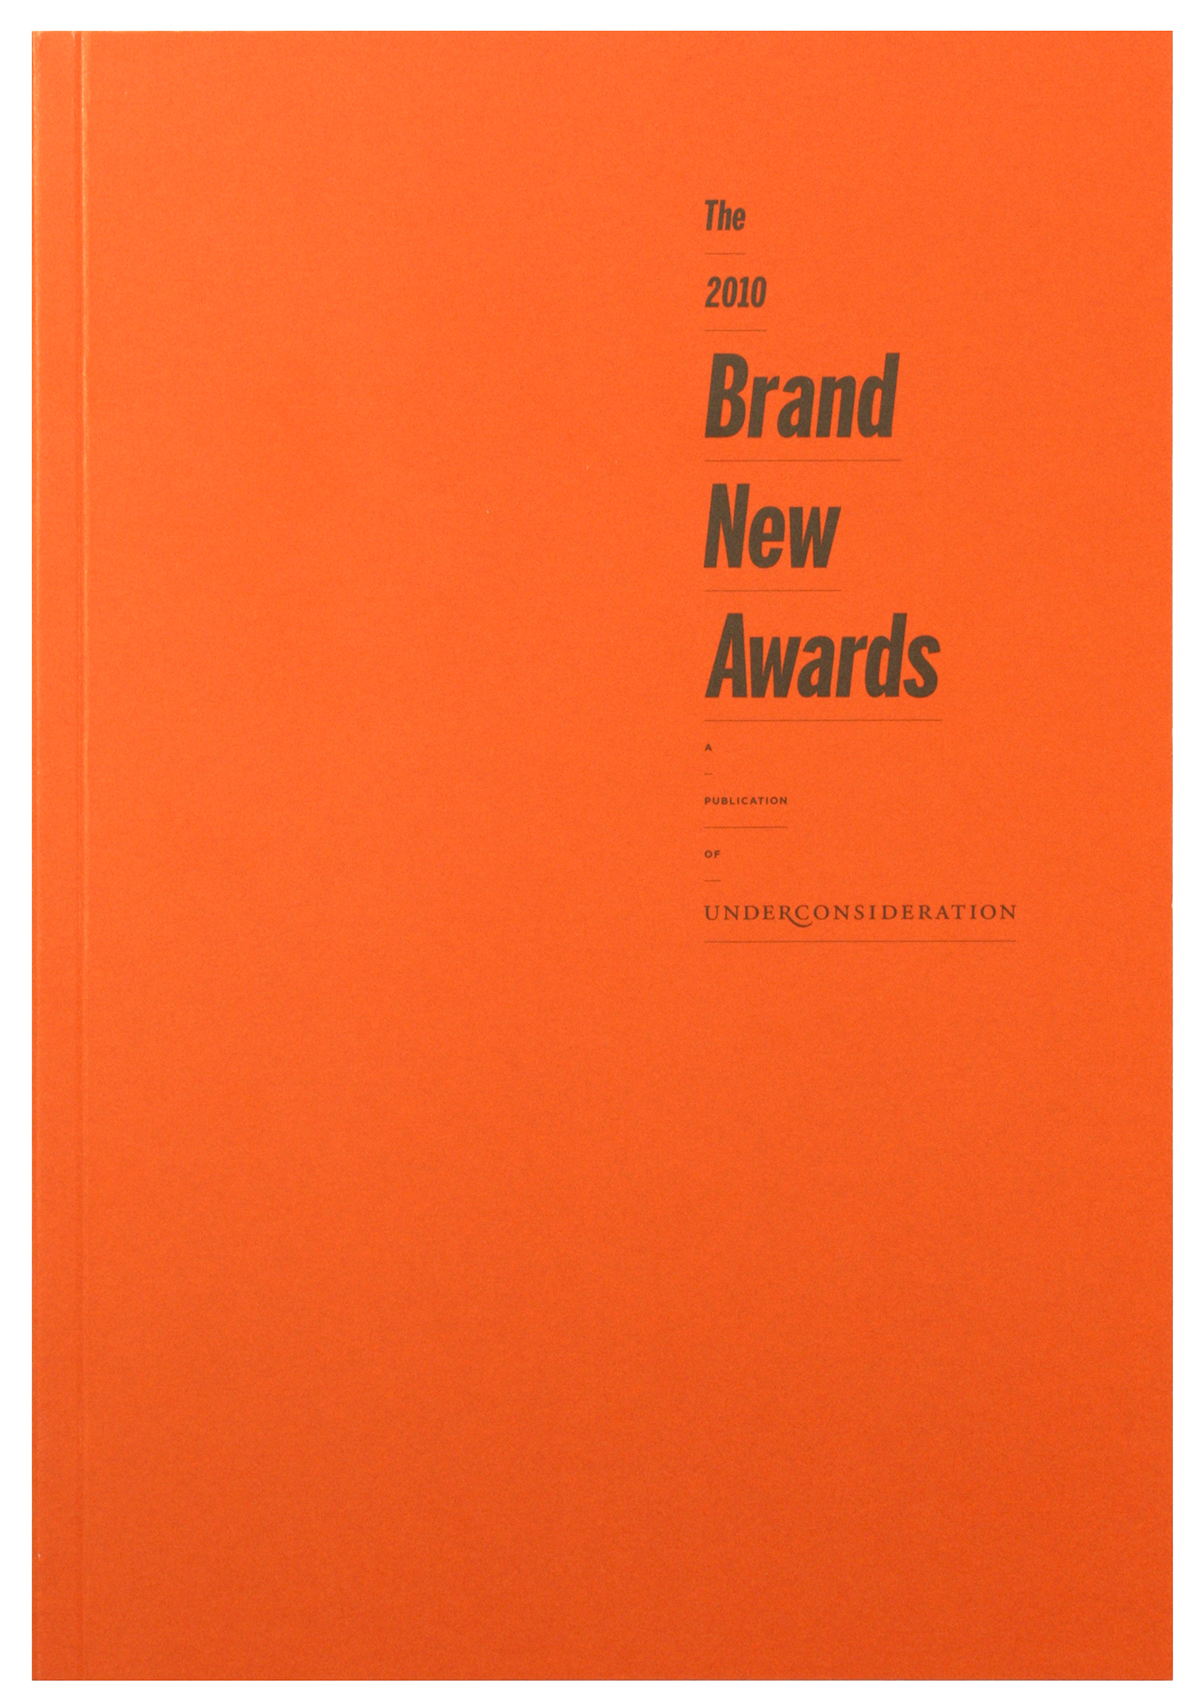 Awards book publication